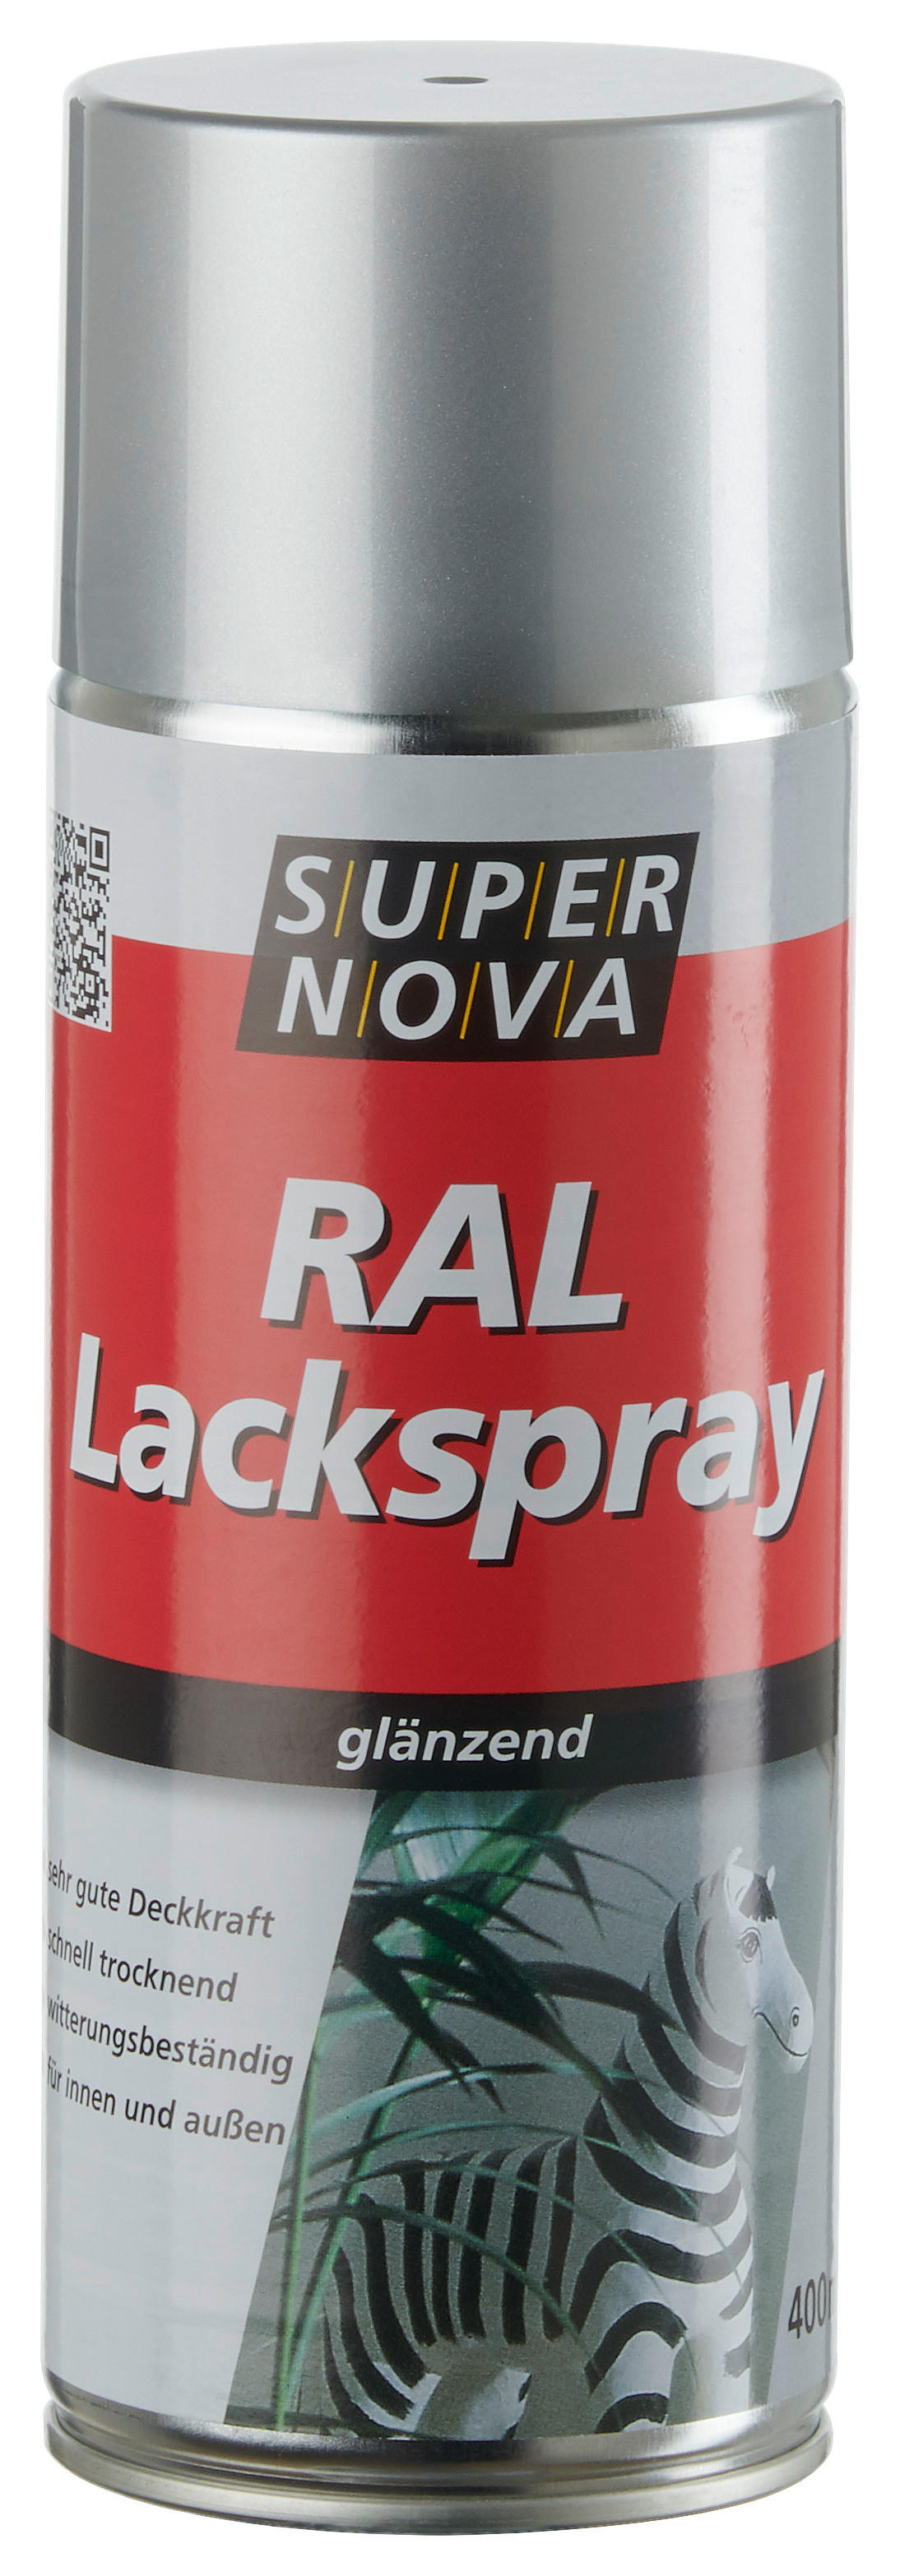 Super-Nova Lackspray weiß glänzend ca. 0,4 l Lackspray 400ml - weiß/Alu (400ml)